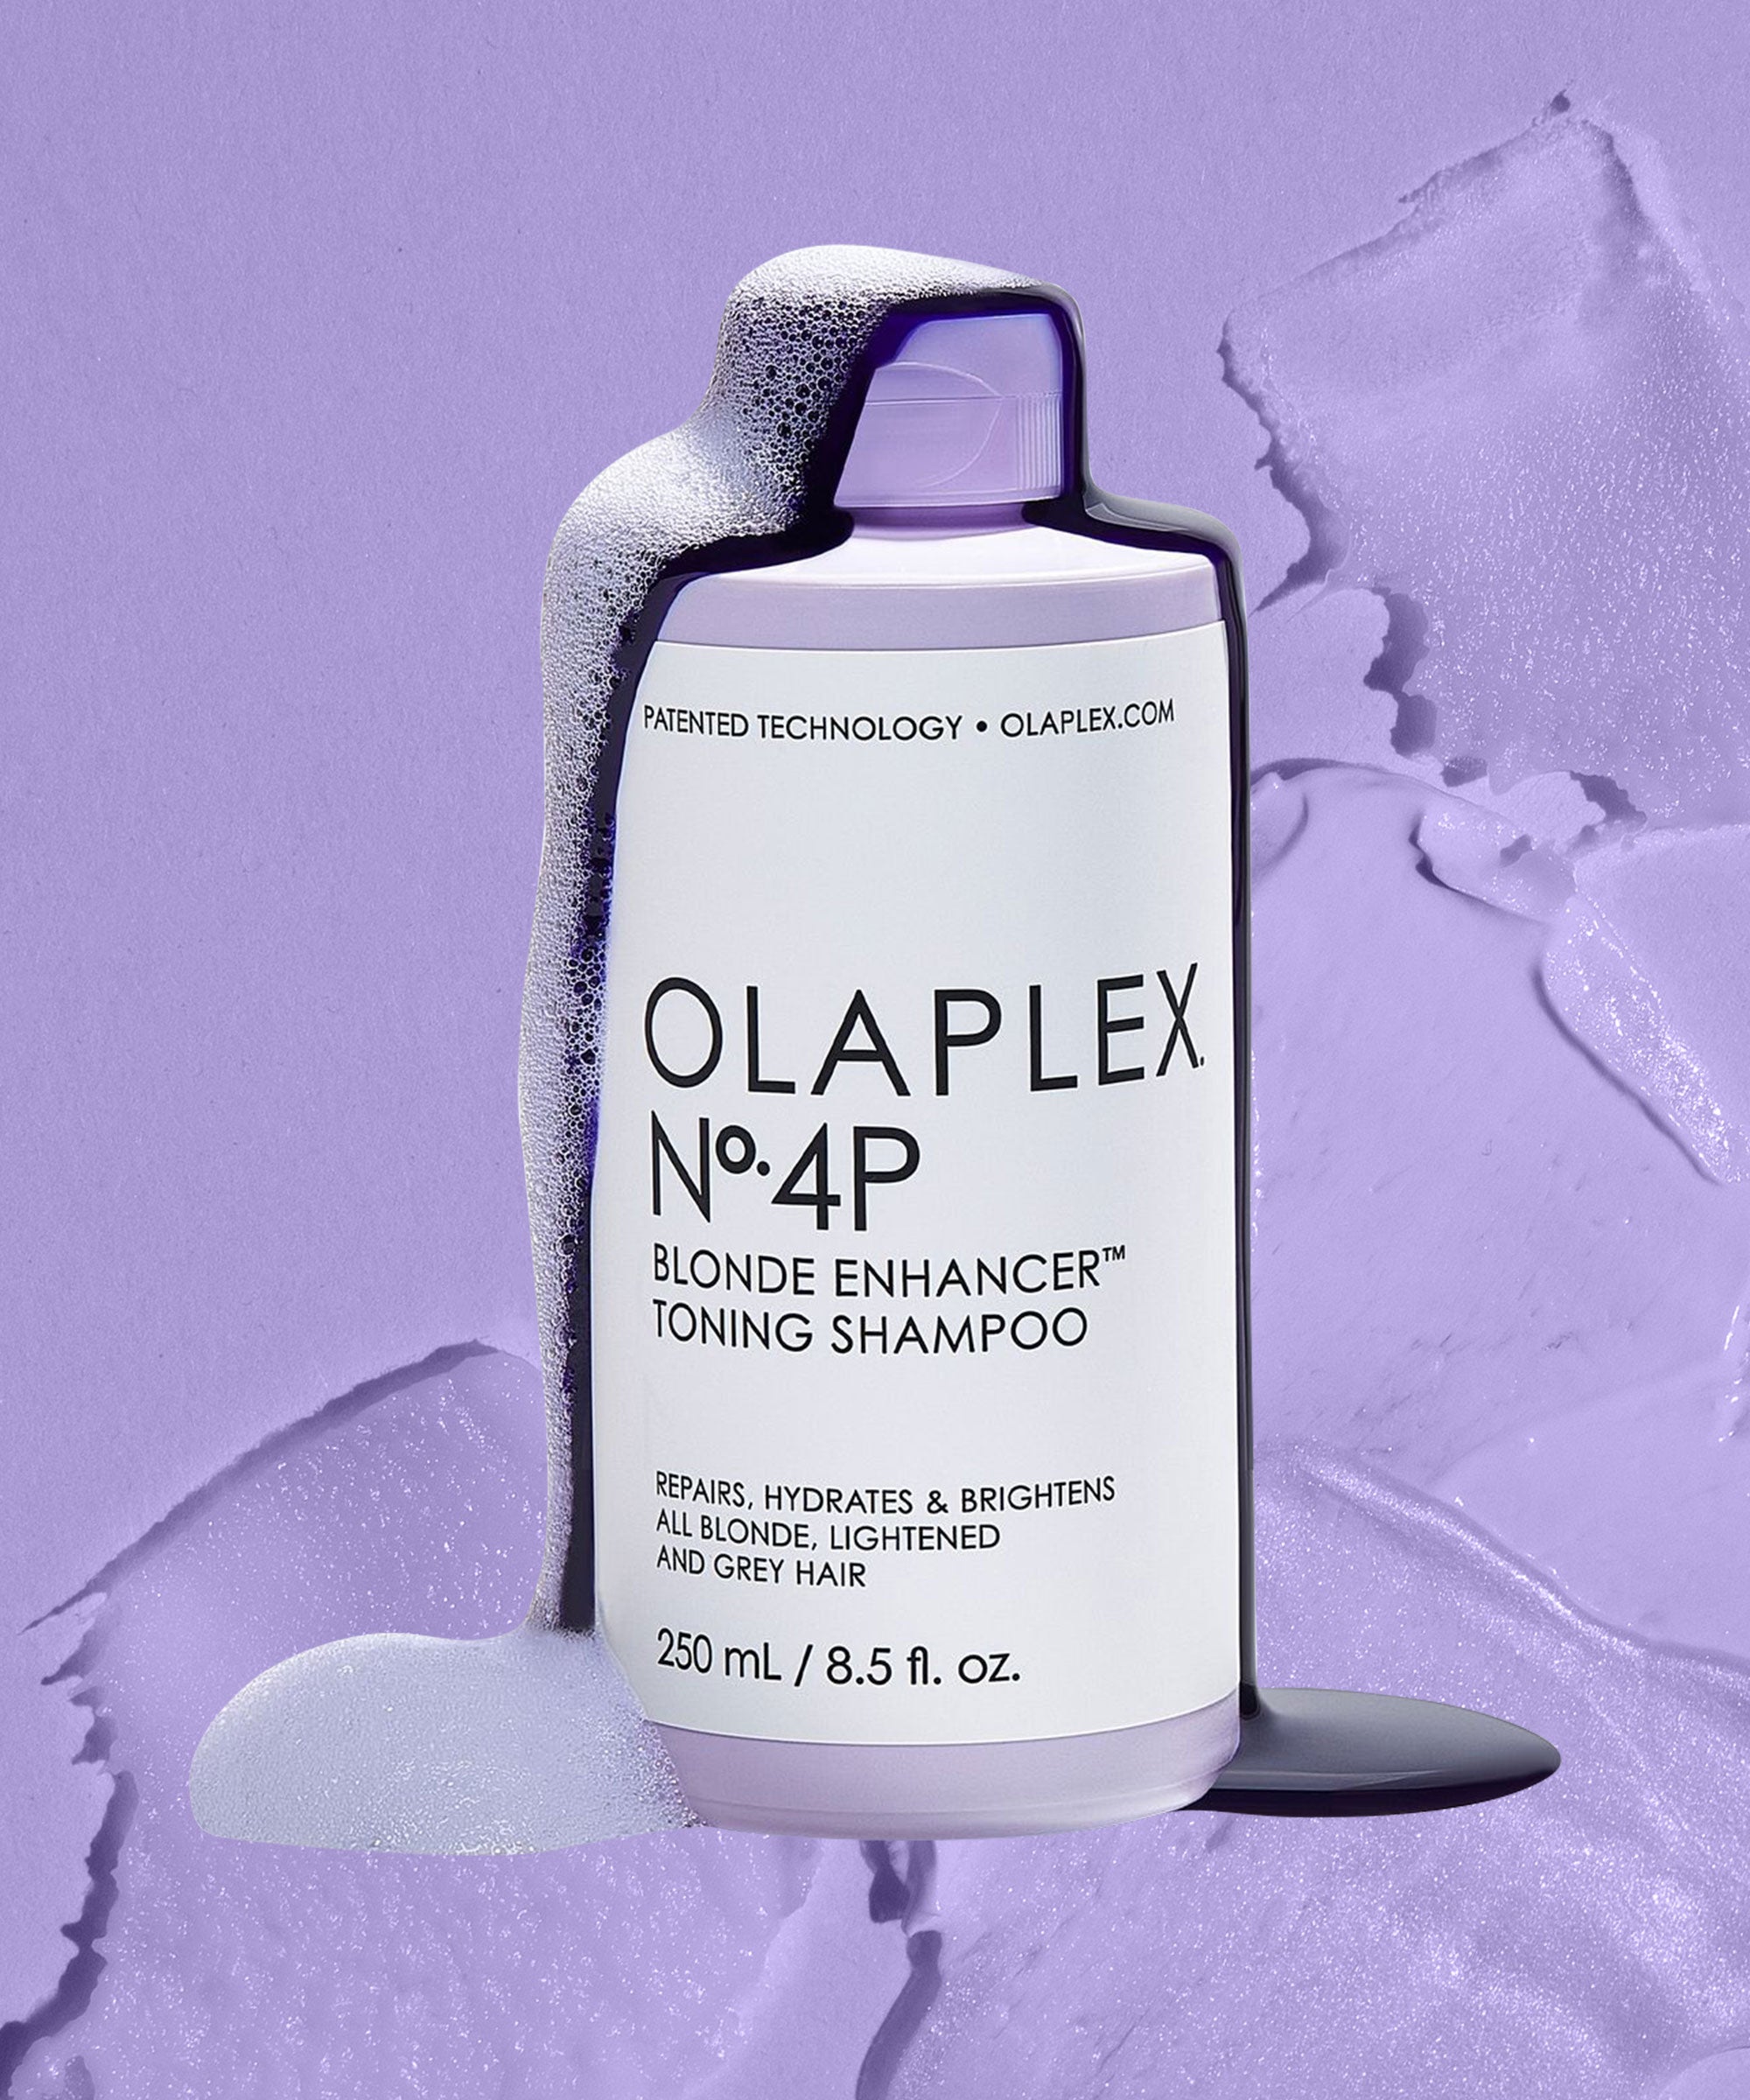 Olaplex Purple Shampoo For Blonde & Grey Hair: Review